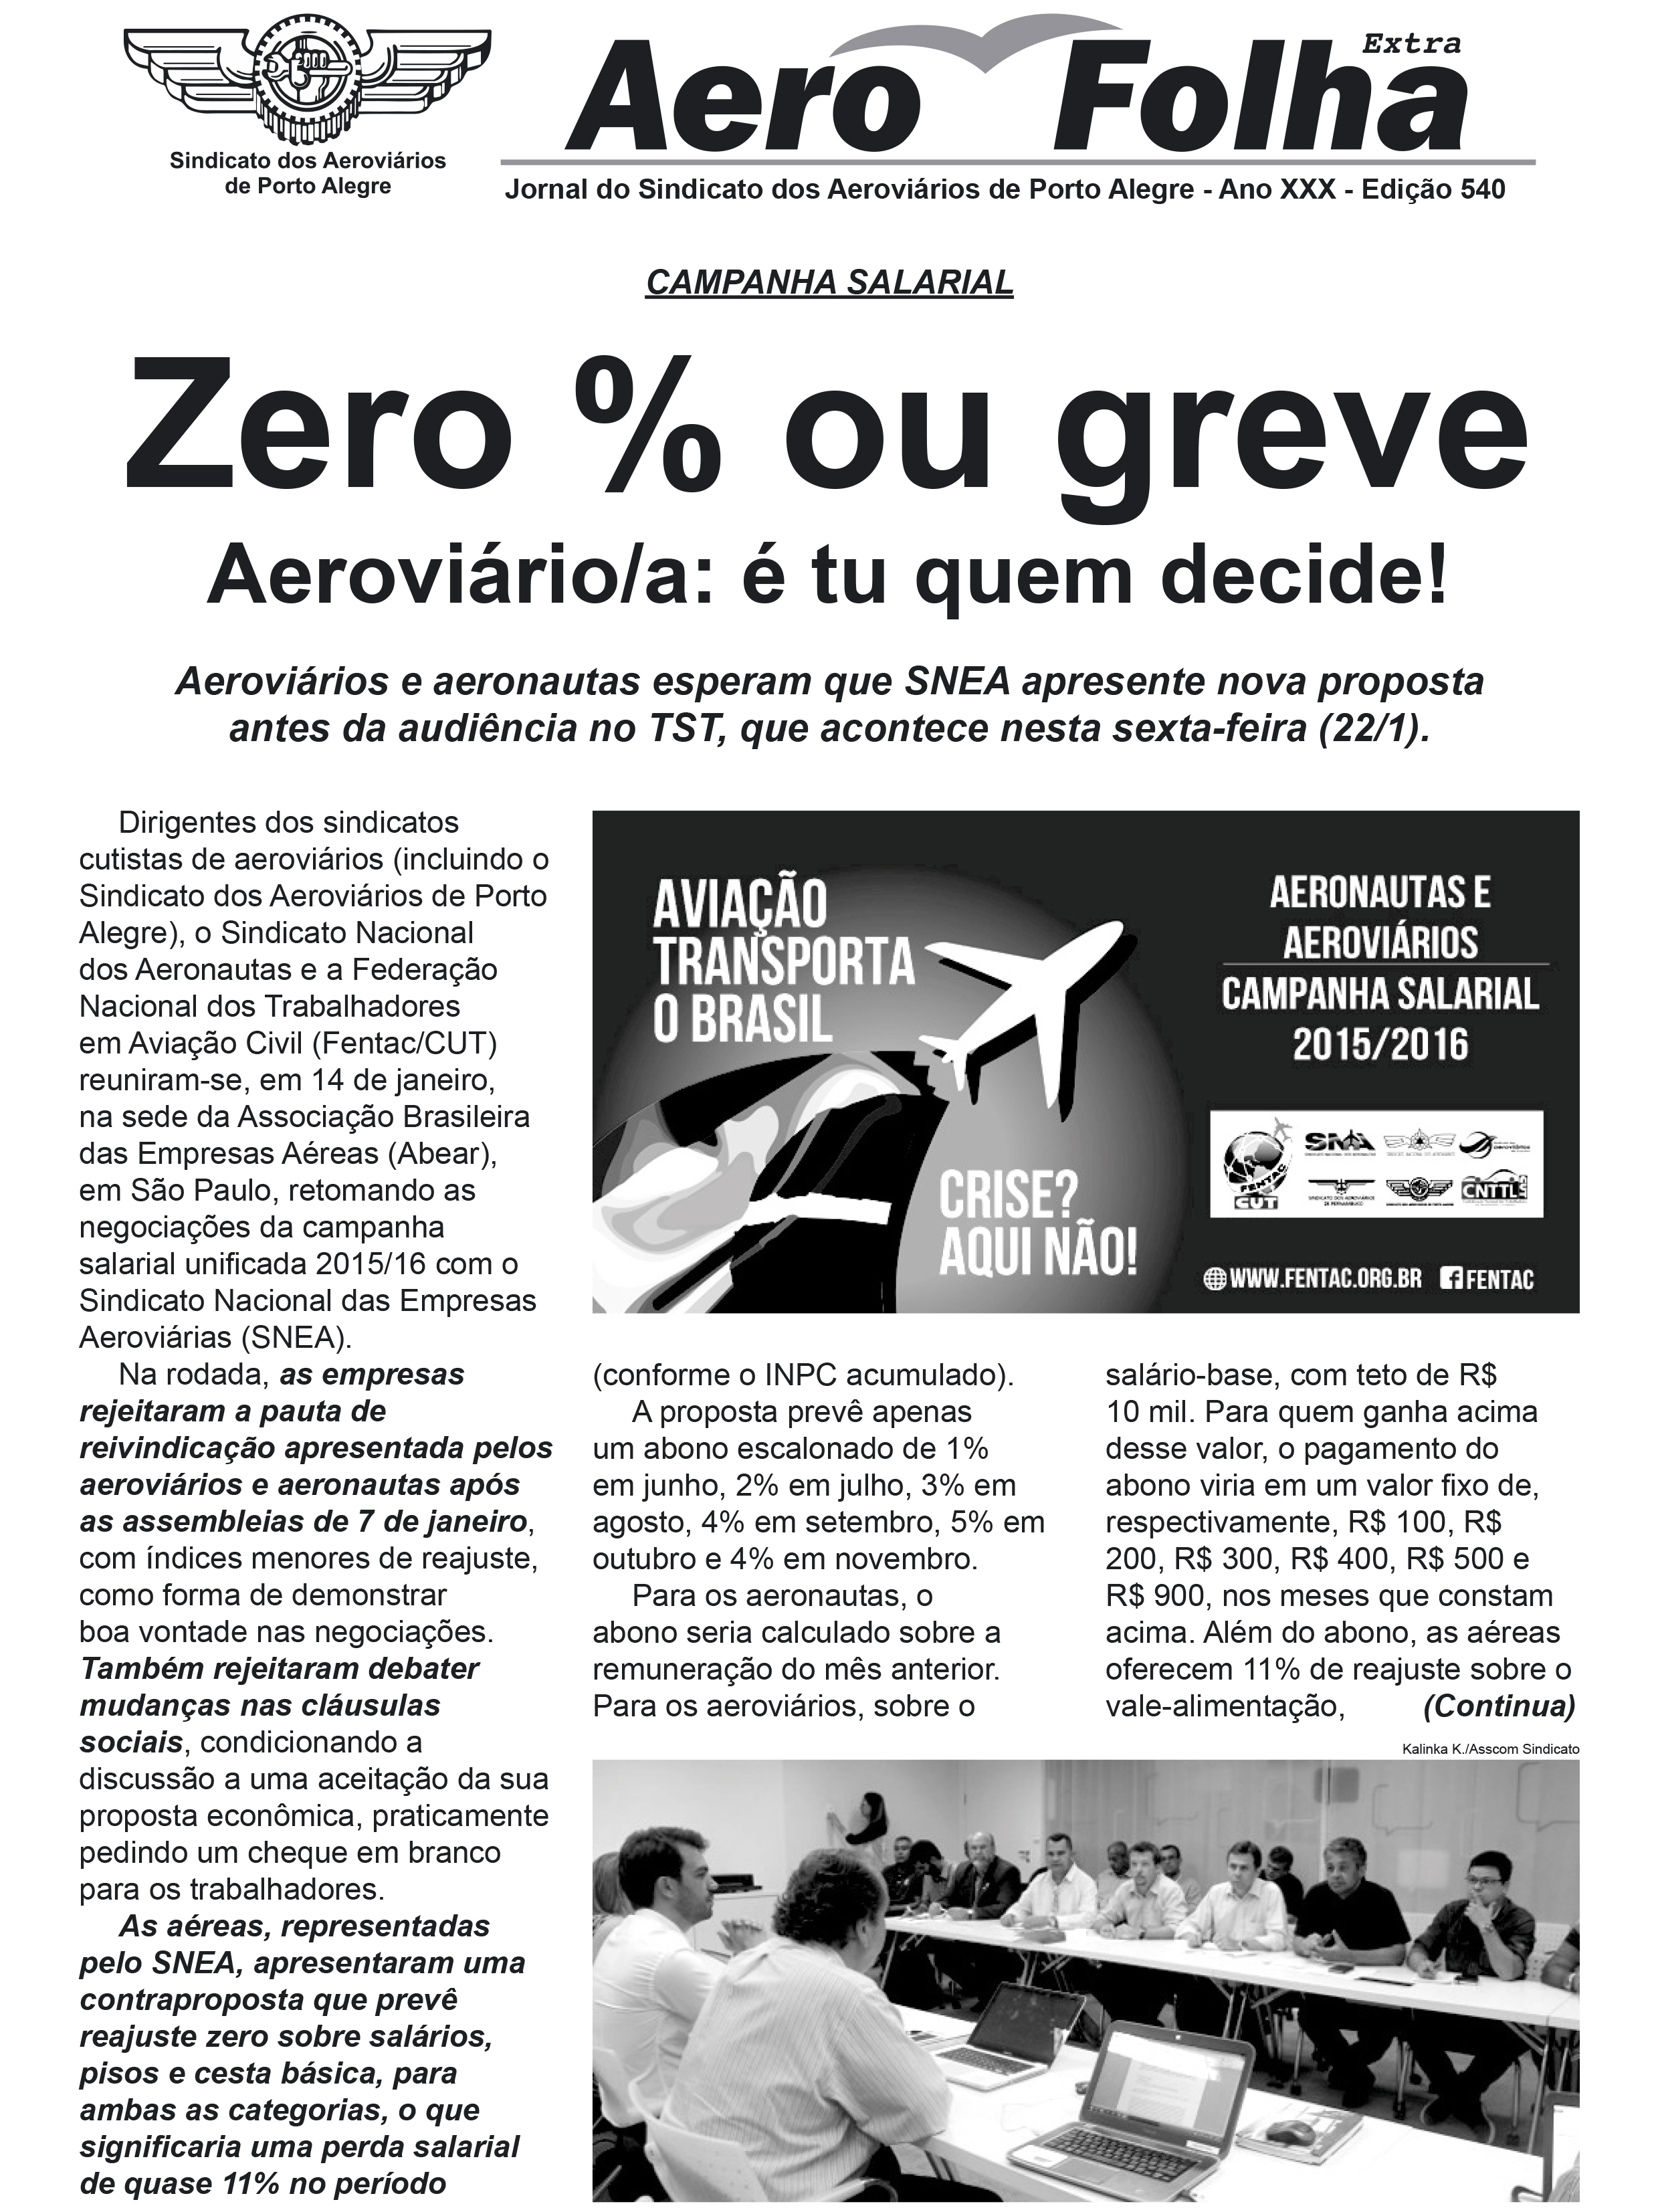 AeroFolha - Sindicato dos Aeroviários de Porto Alegre  - Greve